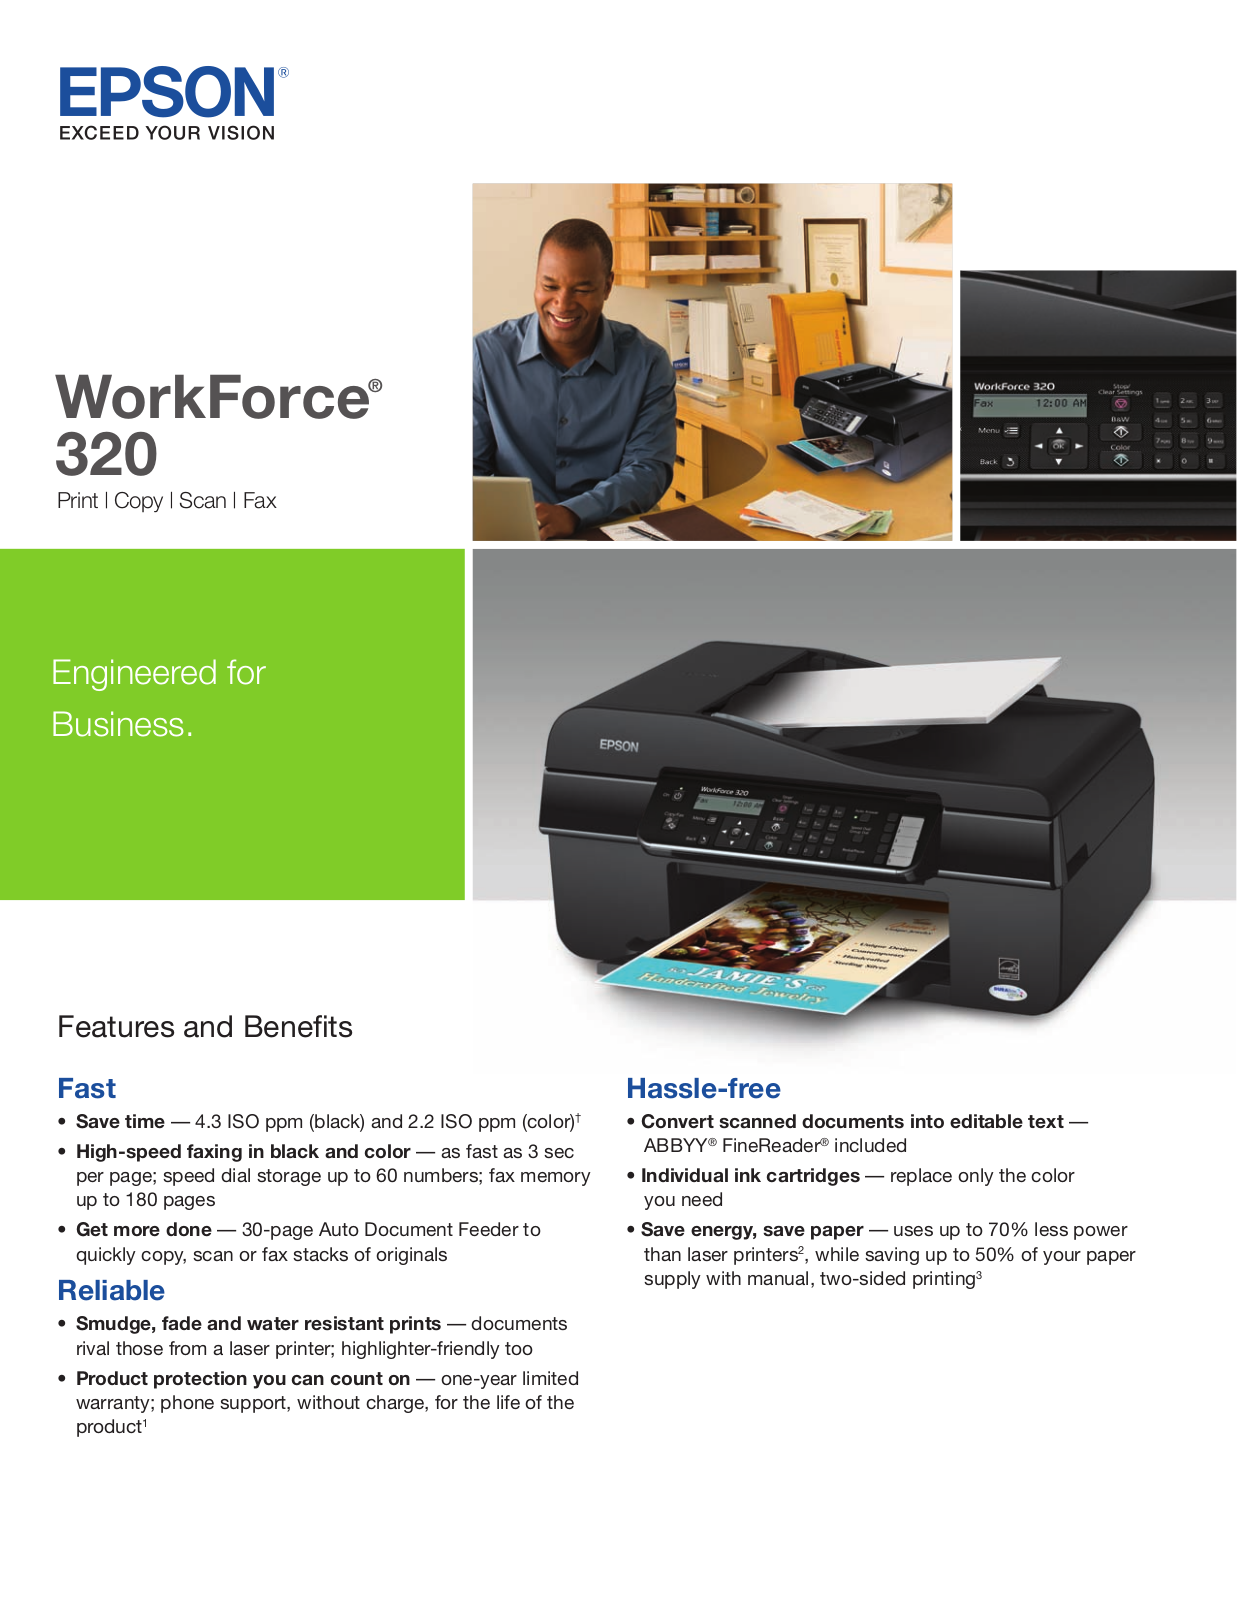 Epson WorkForce 320 Product Brochure